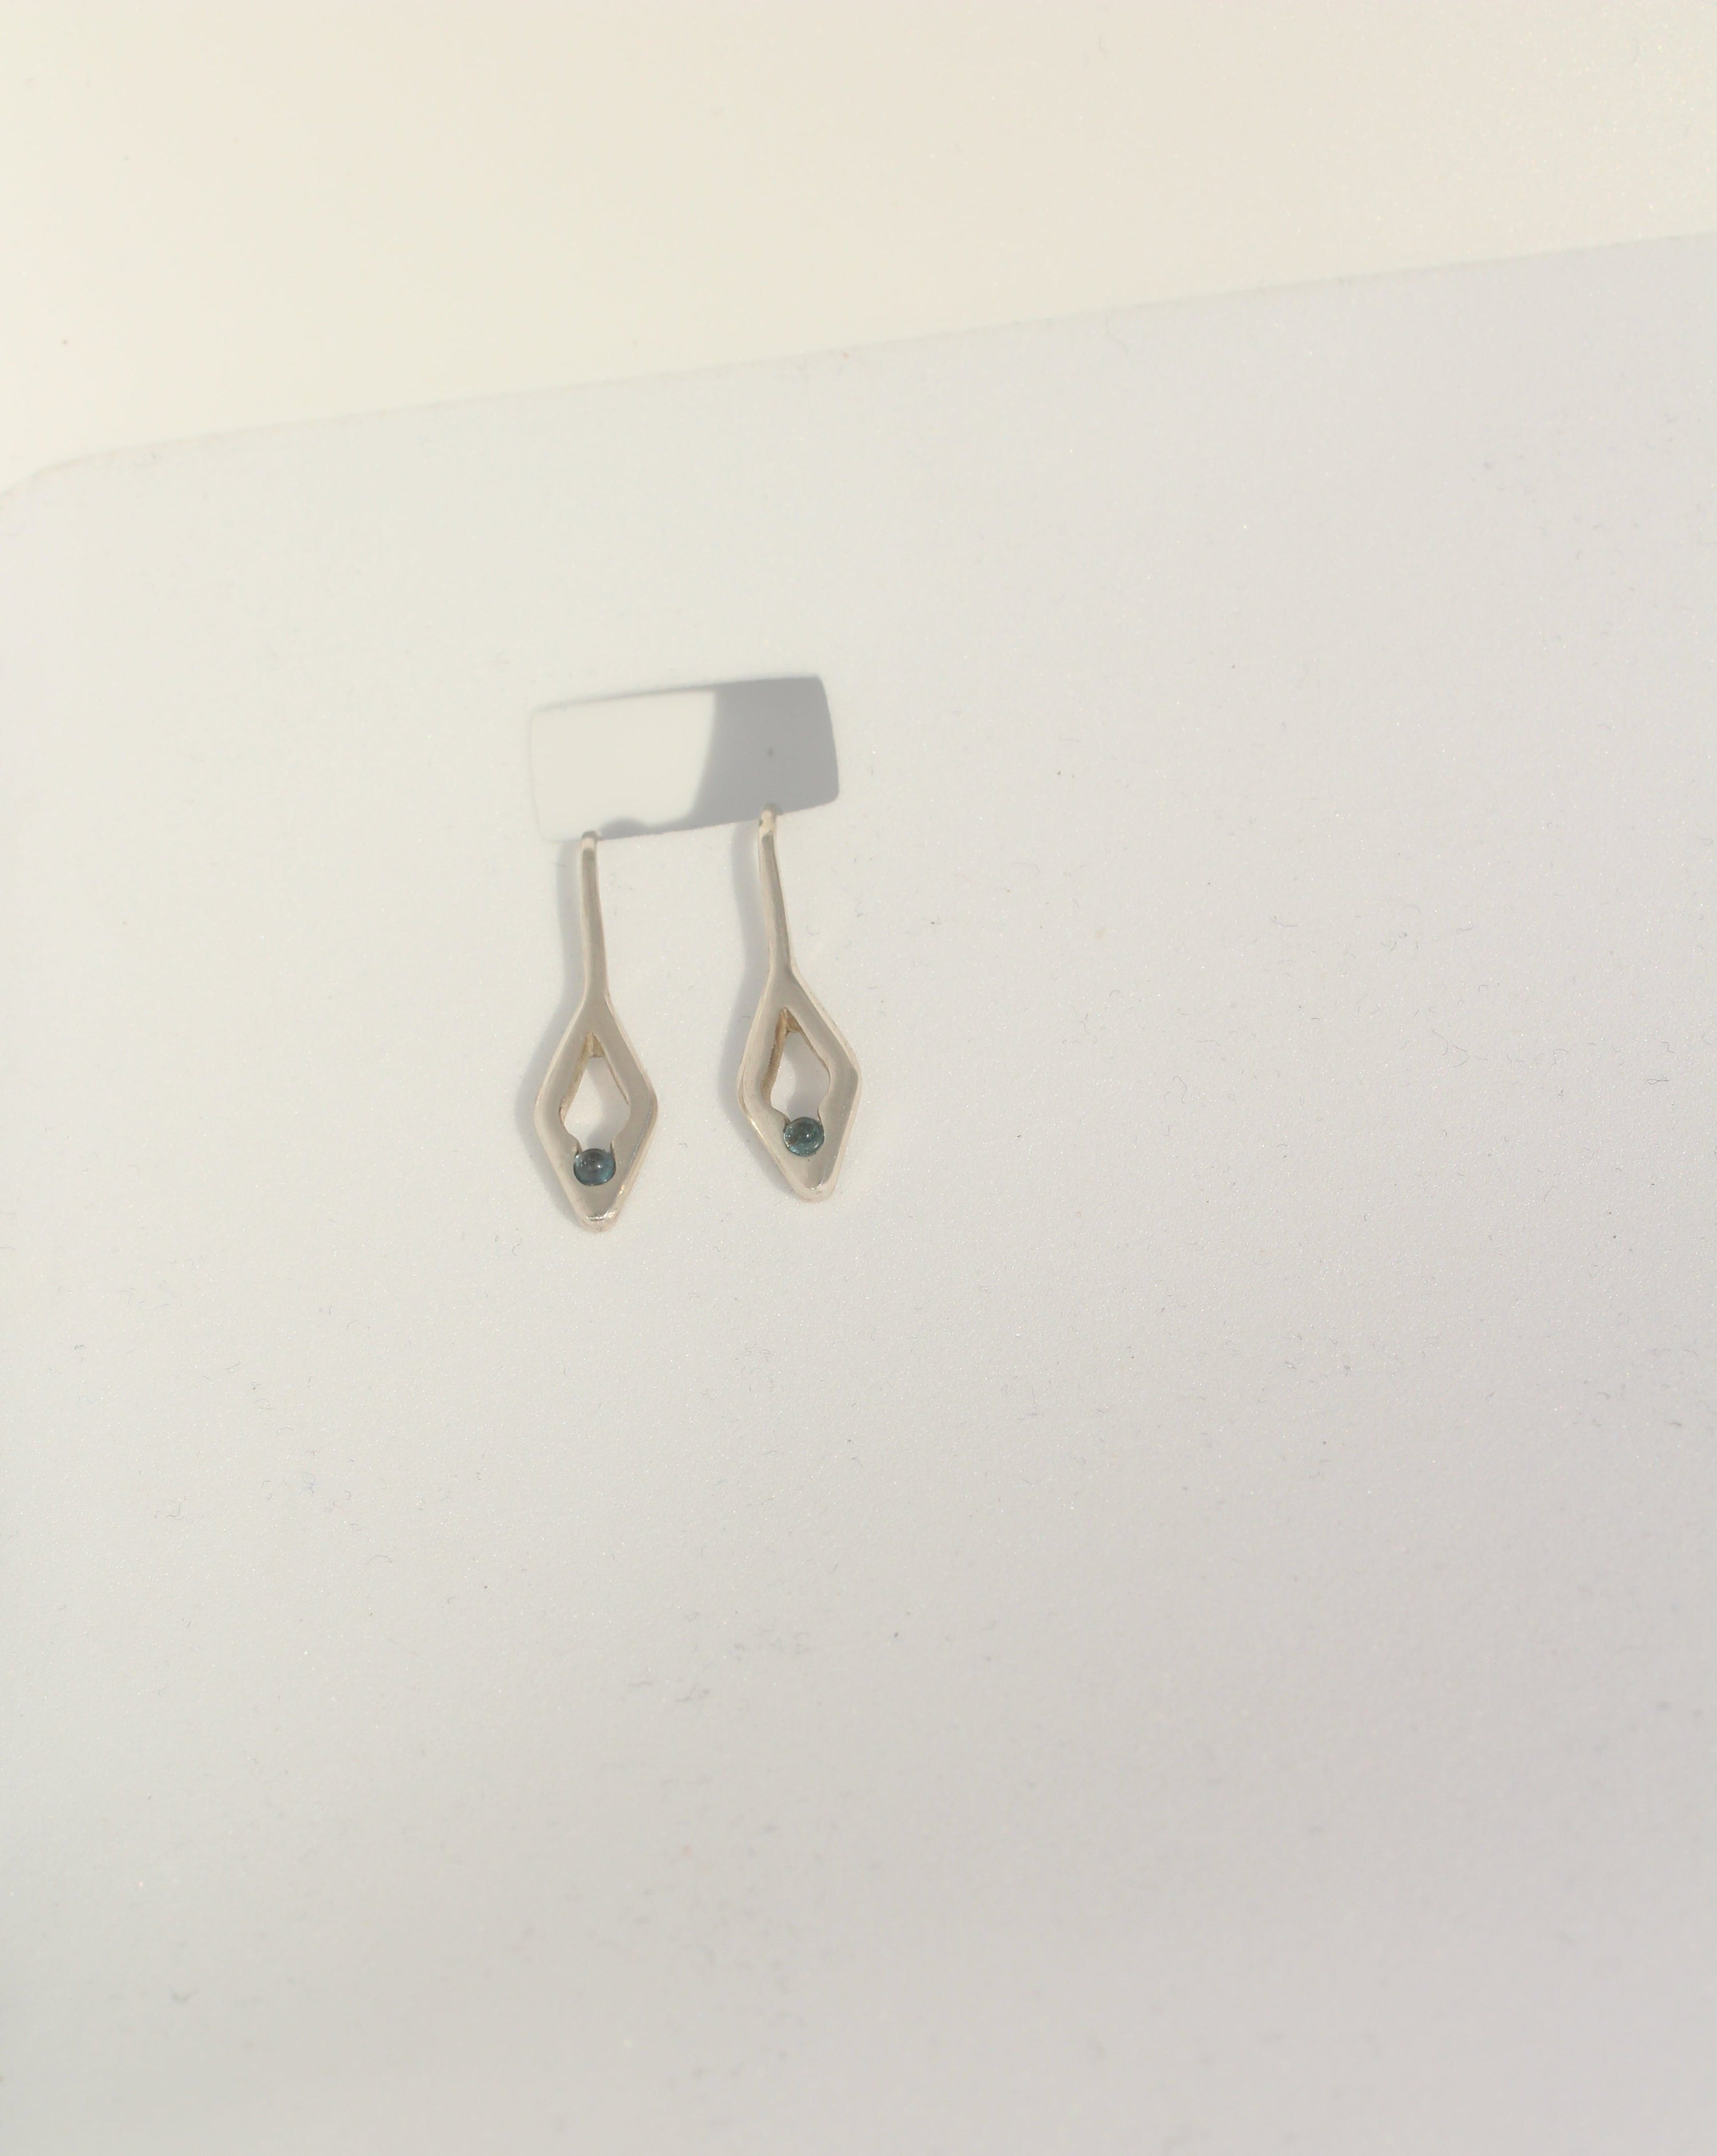 Handmade Silver earrings Naja #03 - made in Switzerland